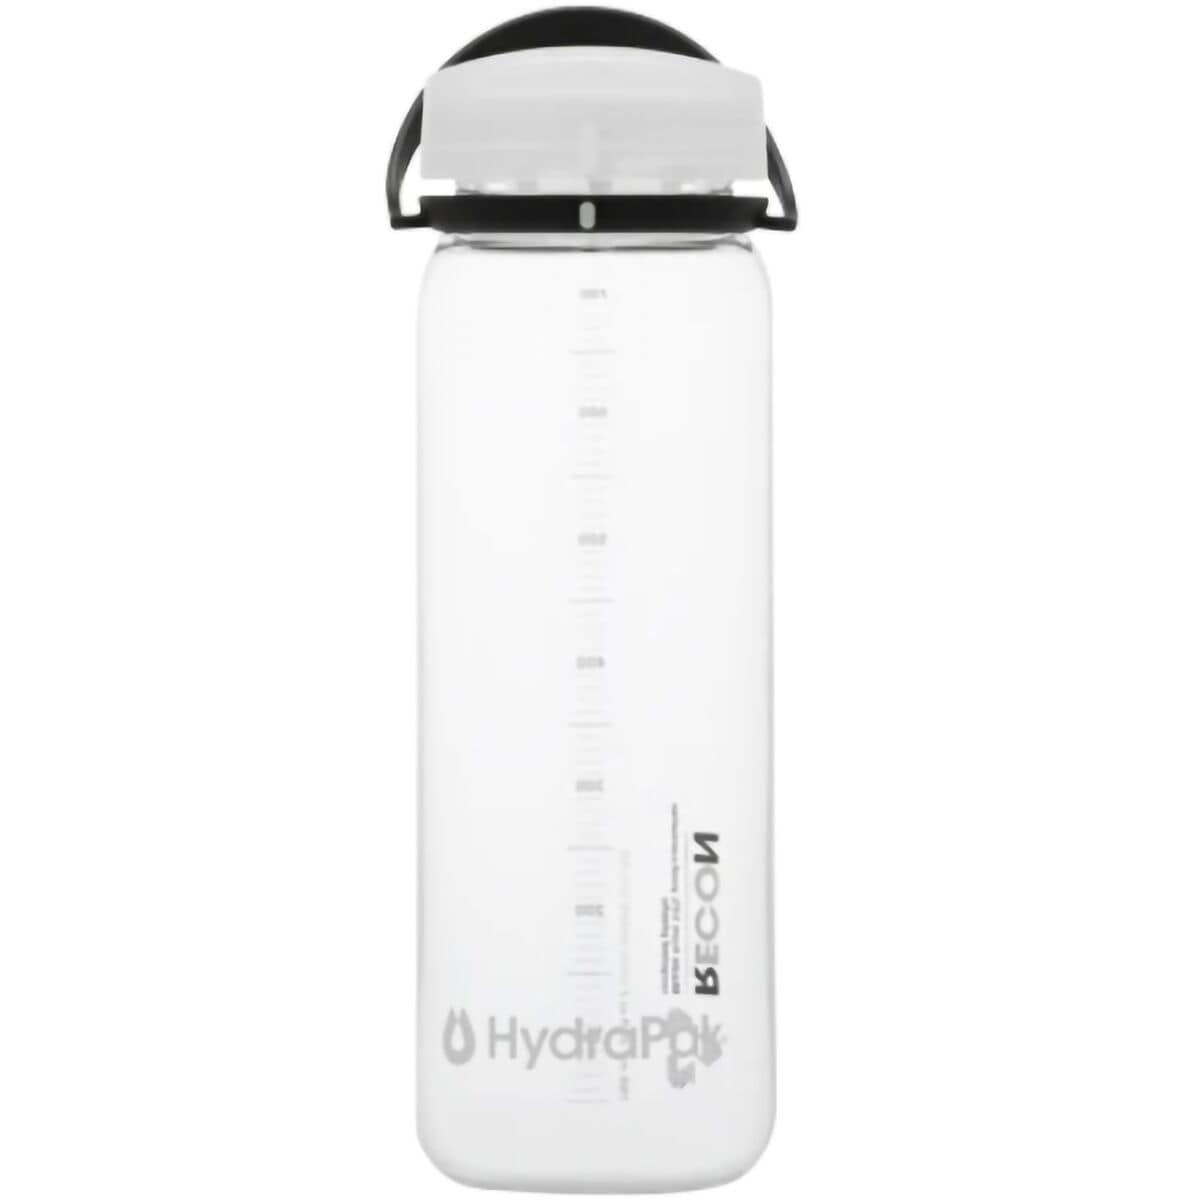 Hydrapak Recon 750ml Water Bottle Clear/Black & White, 750ml